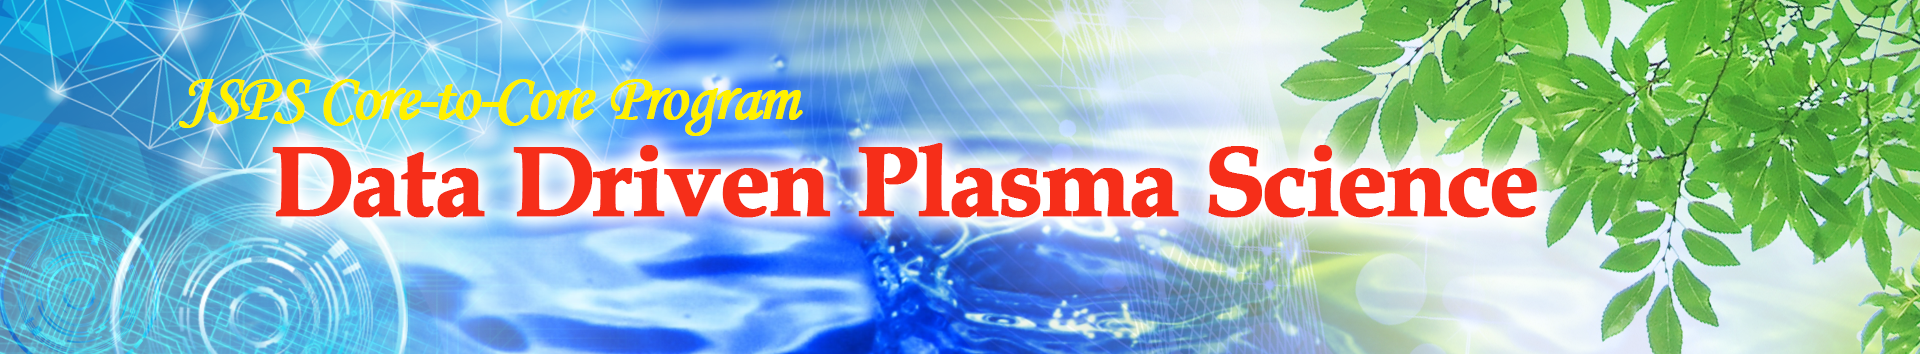 Data Driven Plasma Science